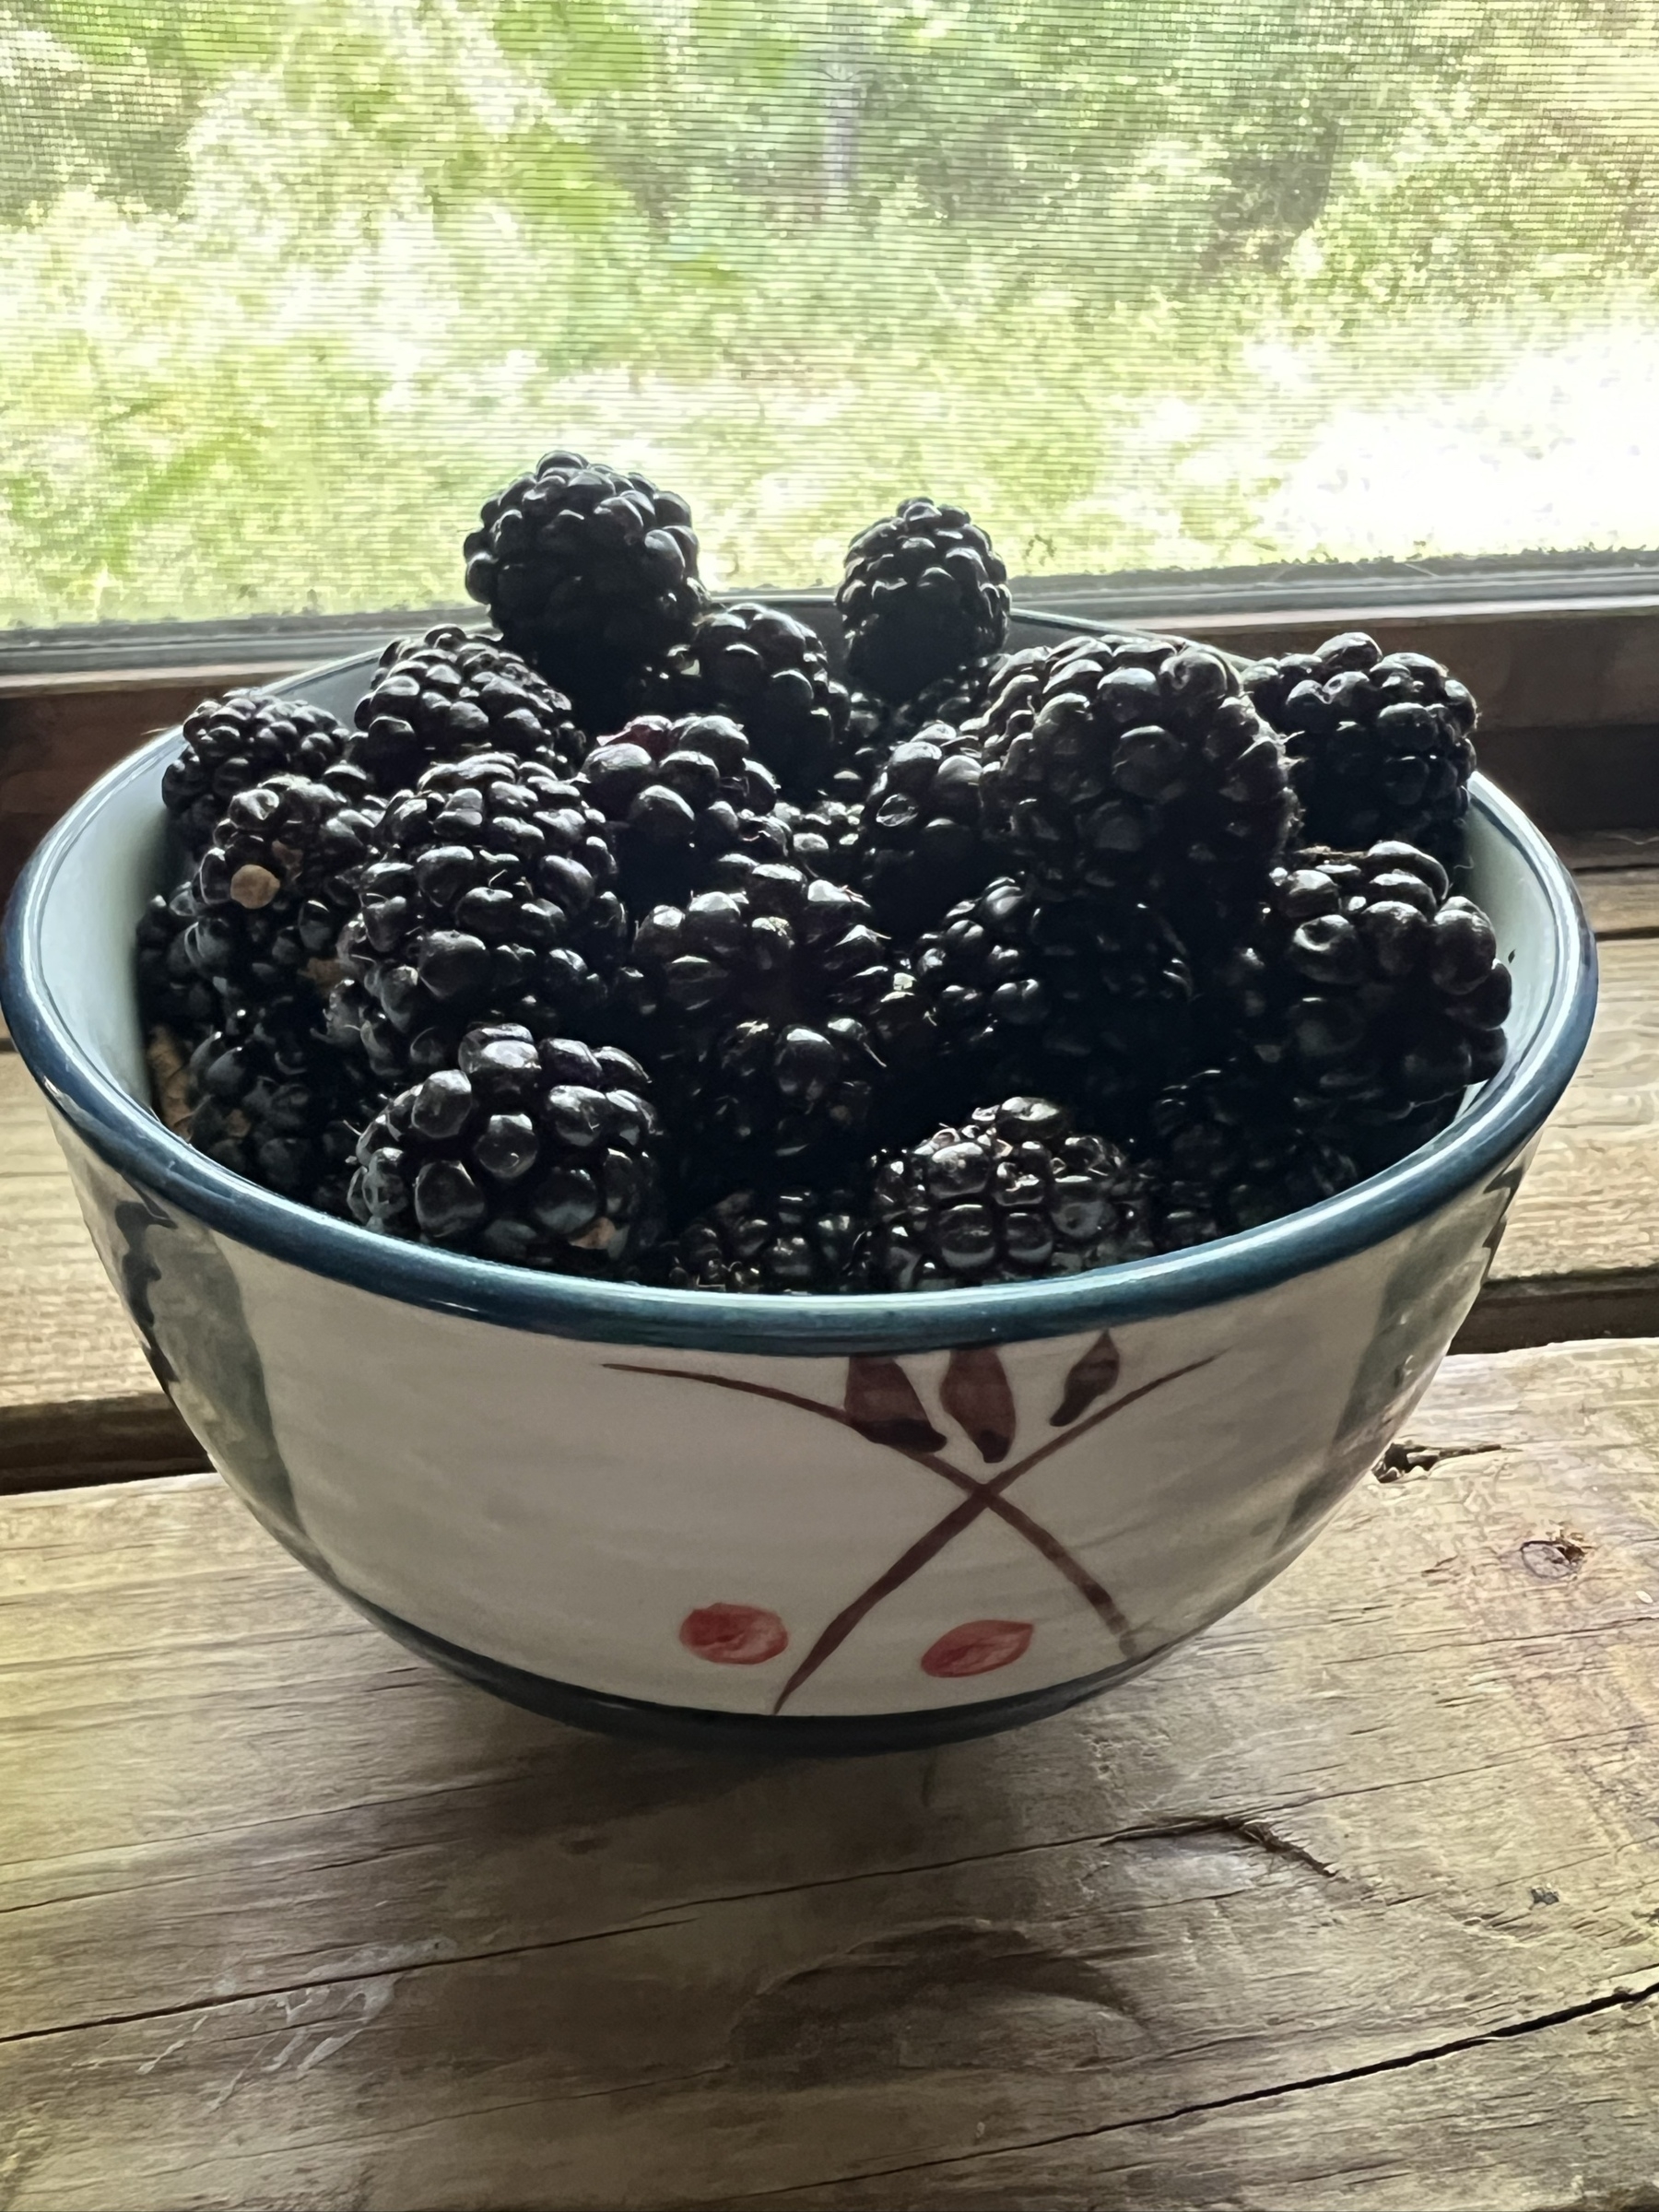 A white ceramic bowl full of ripe blackberries sits on a wood shelf.